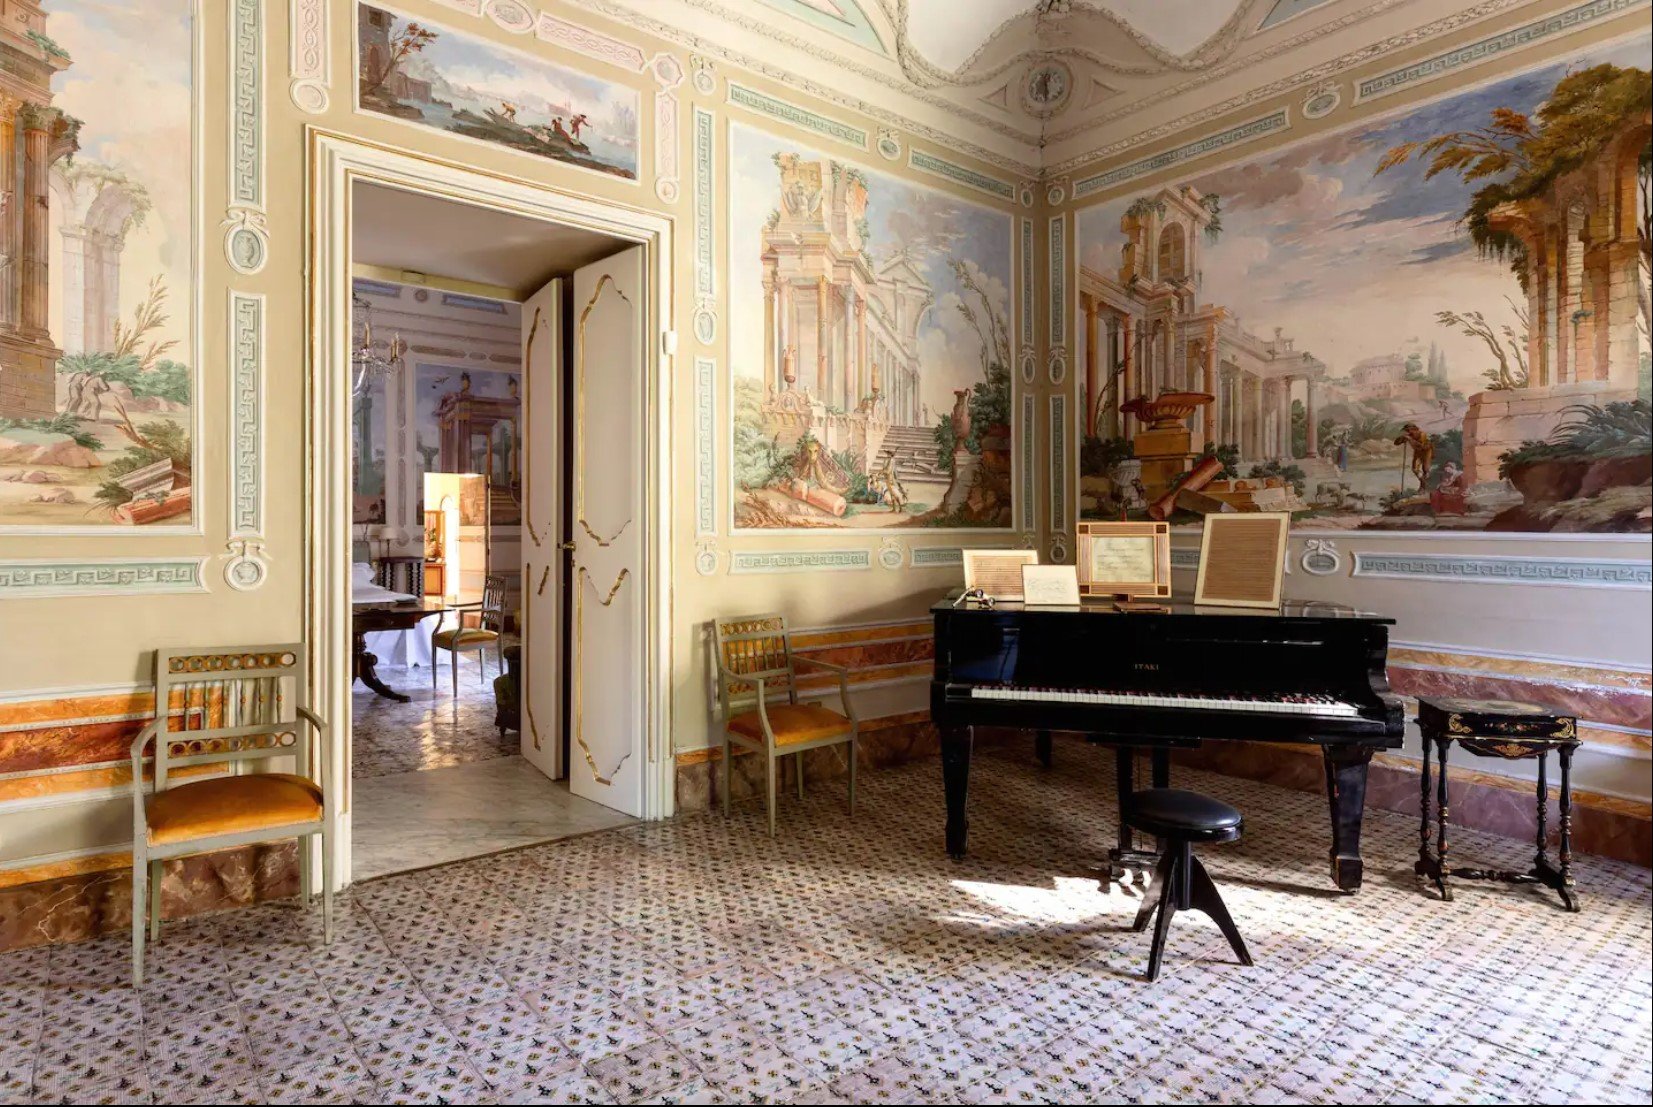 villa tasca piano in frescoed room.jpg